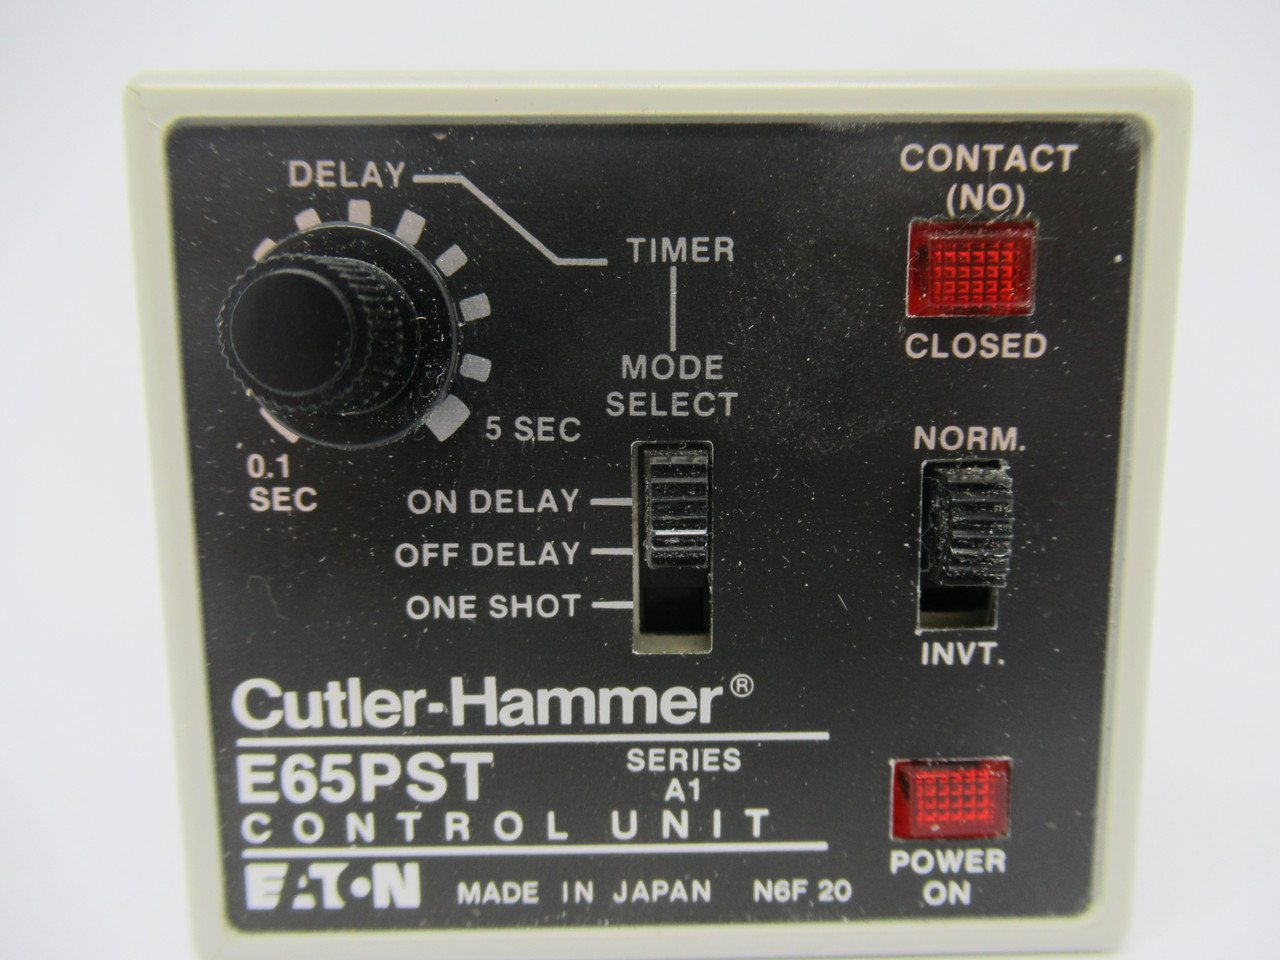 Cutler-Hammer E65PST Control Unit Delay Timer 0.1-5sec 250V *Missing Holder* NEW